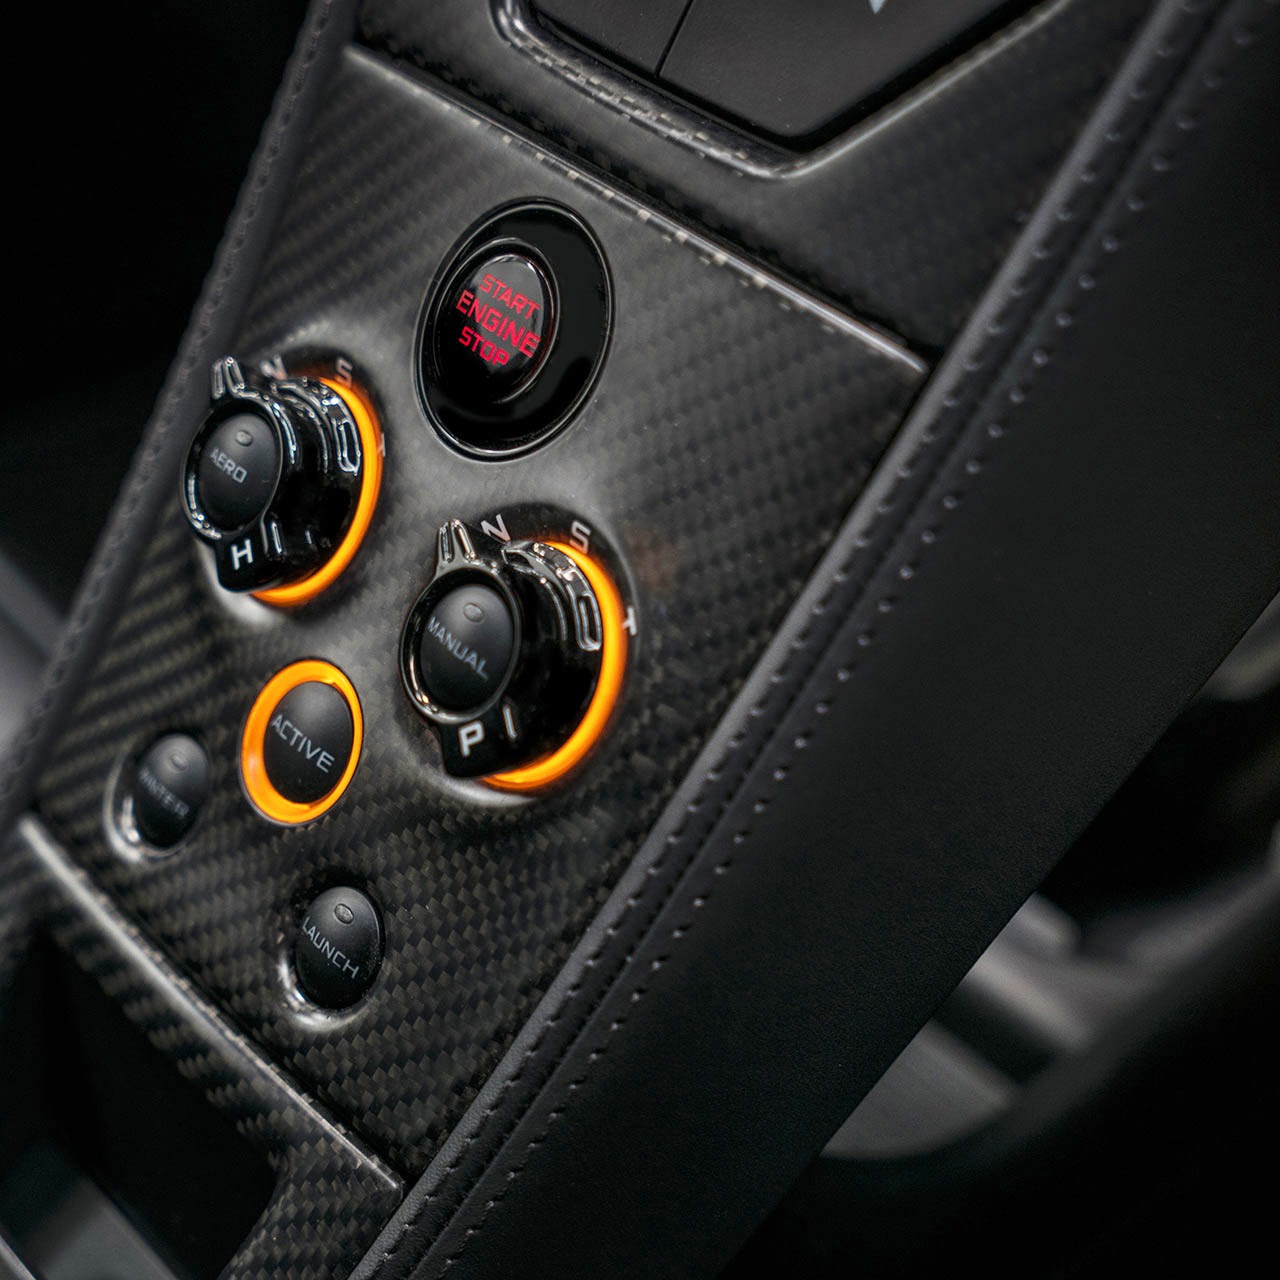 McLaren MSO 650S Coupe Concept dash detail